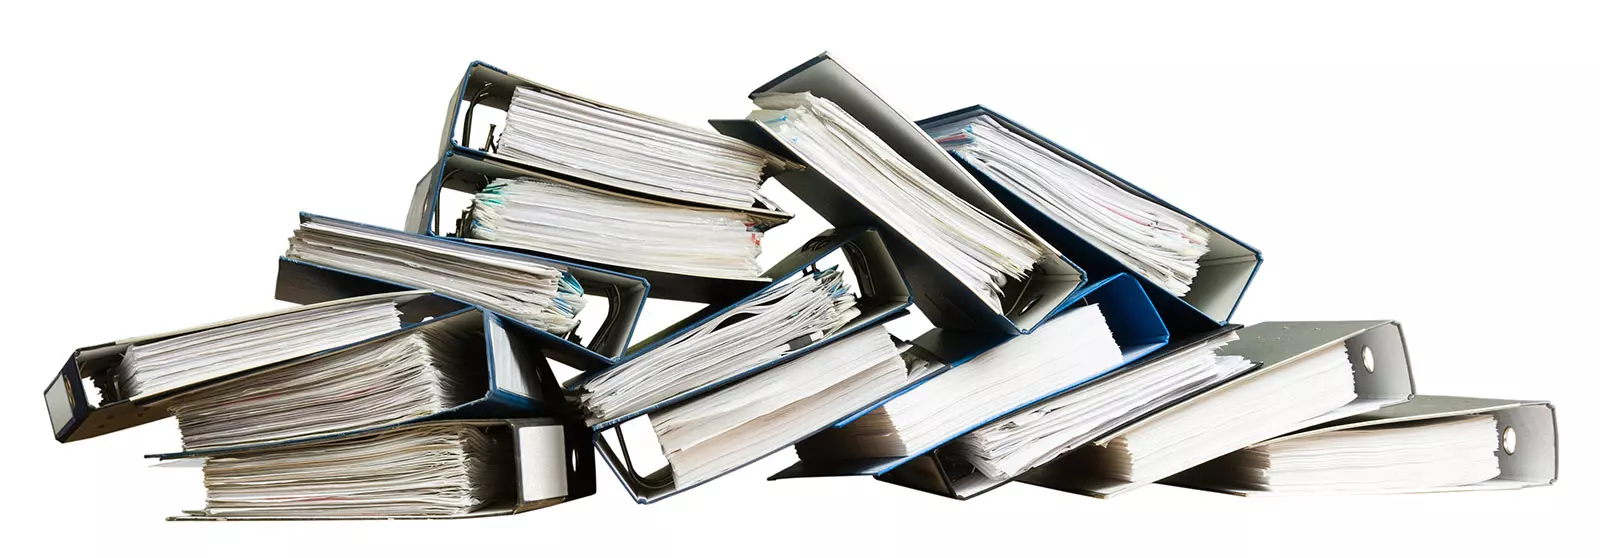 a pile of folders